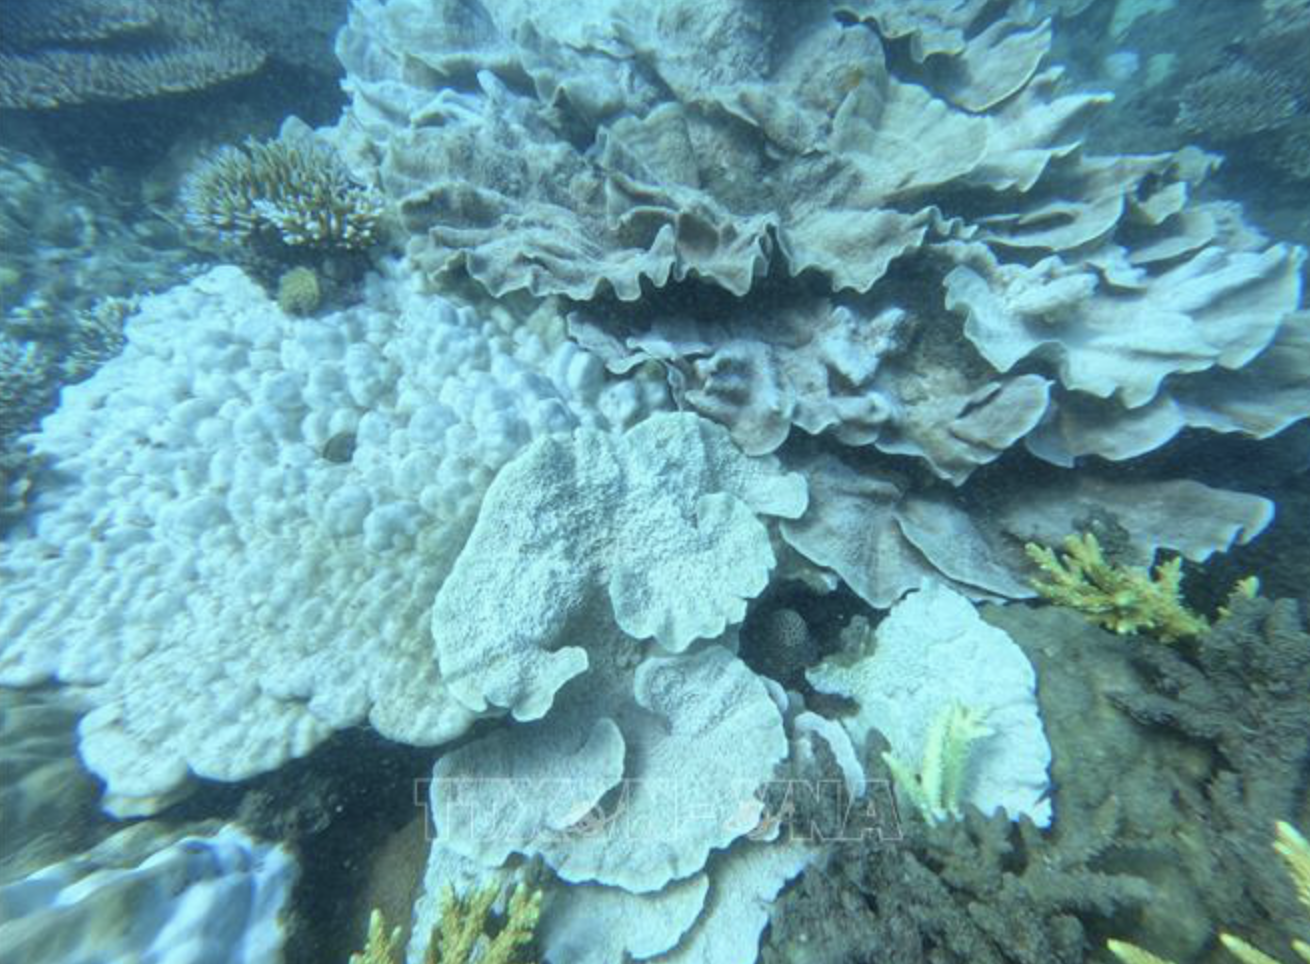 Hon Tre Nho Island off Con Dao Archipelago, Ba Ria - Vung Tau Province, southern Vietnam sees some 60 - 70 percent of corals bleached. Photo: Vietnam News Agency